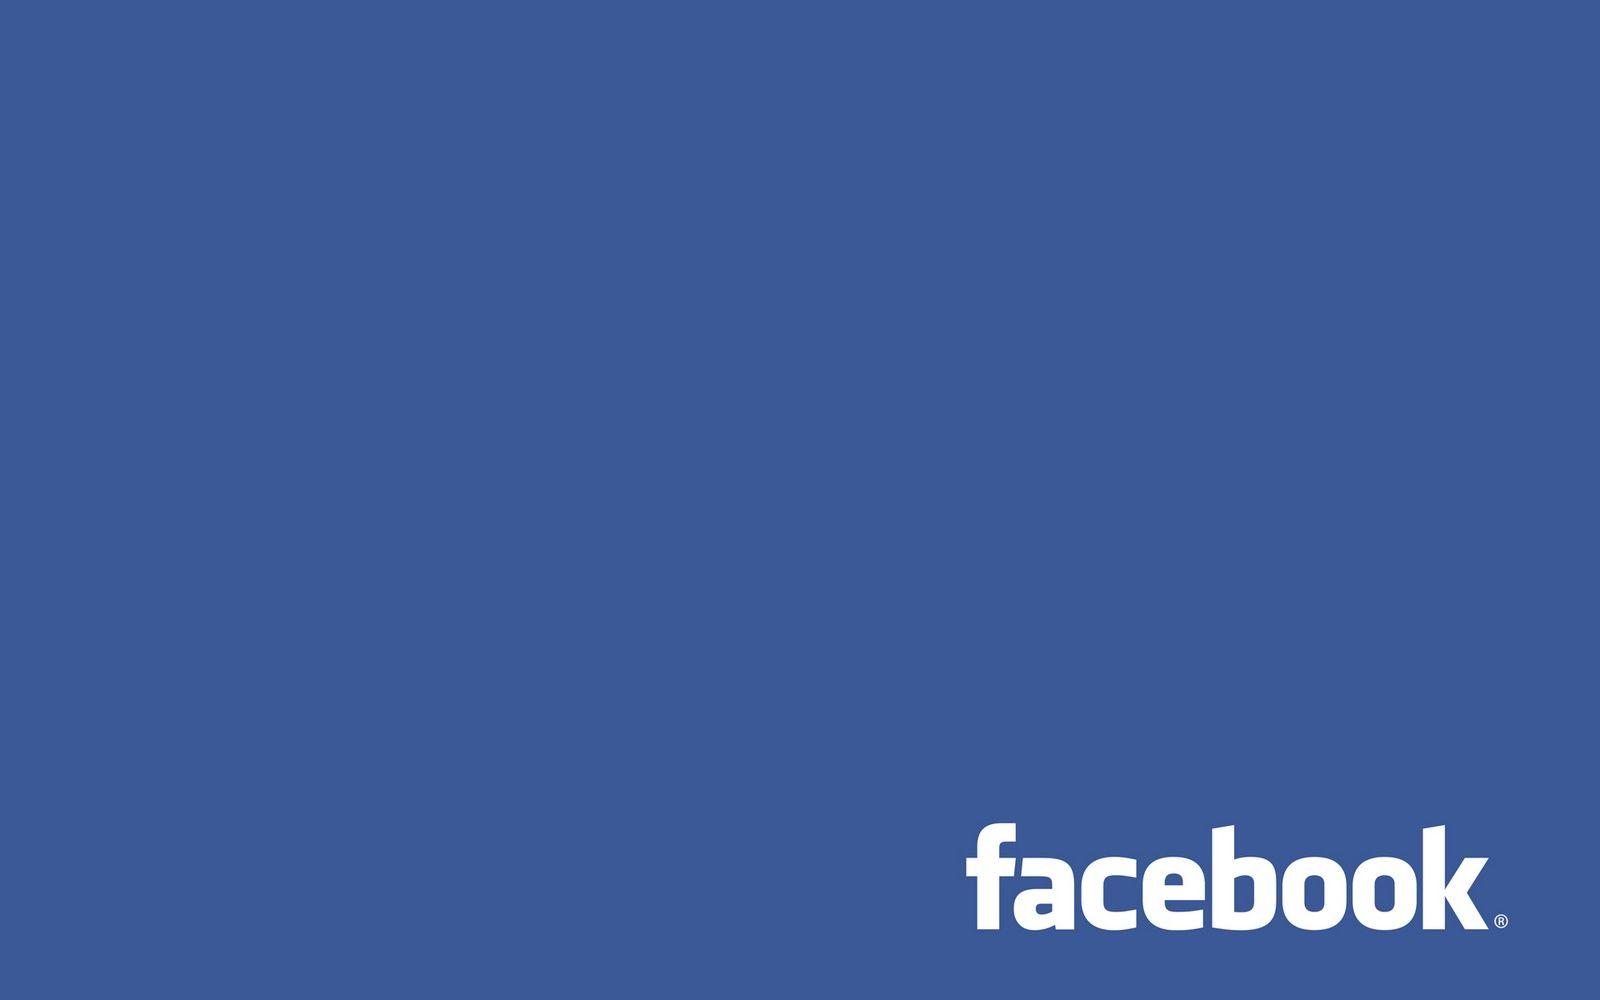 Best Blue and White Logo - Best-top-desktop-facebook-wallpapers-hd-facebook-wallpaper-picture ...